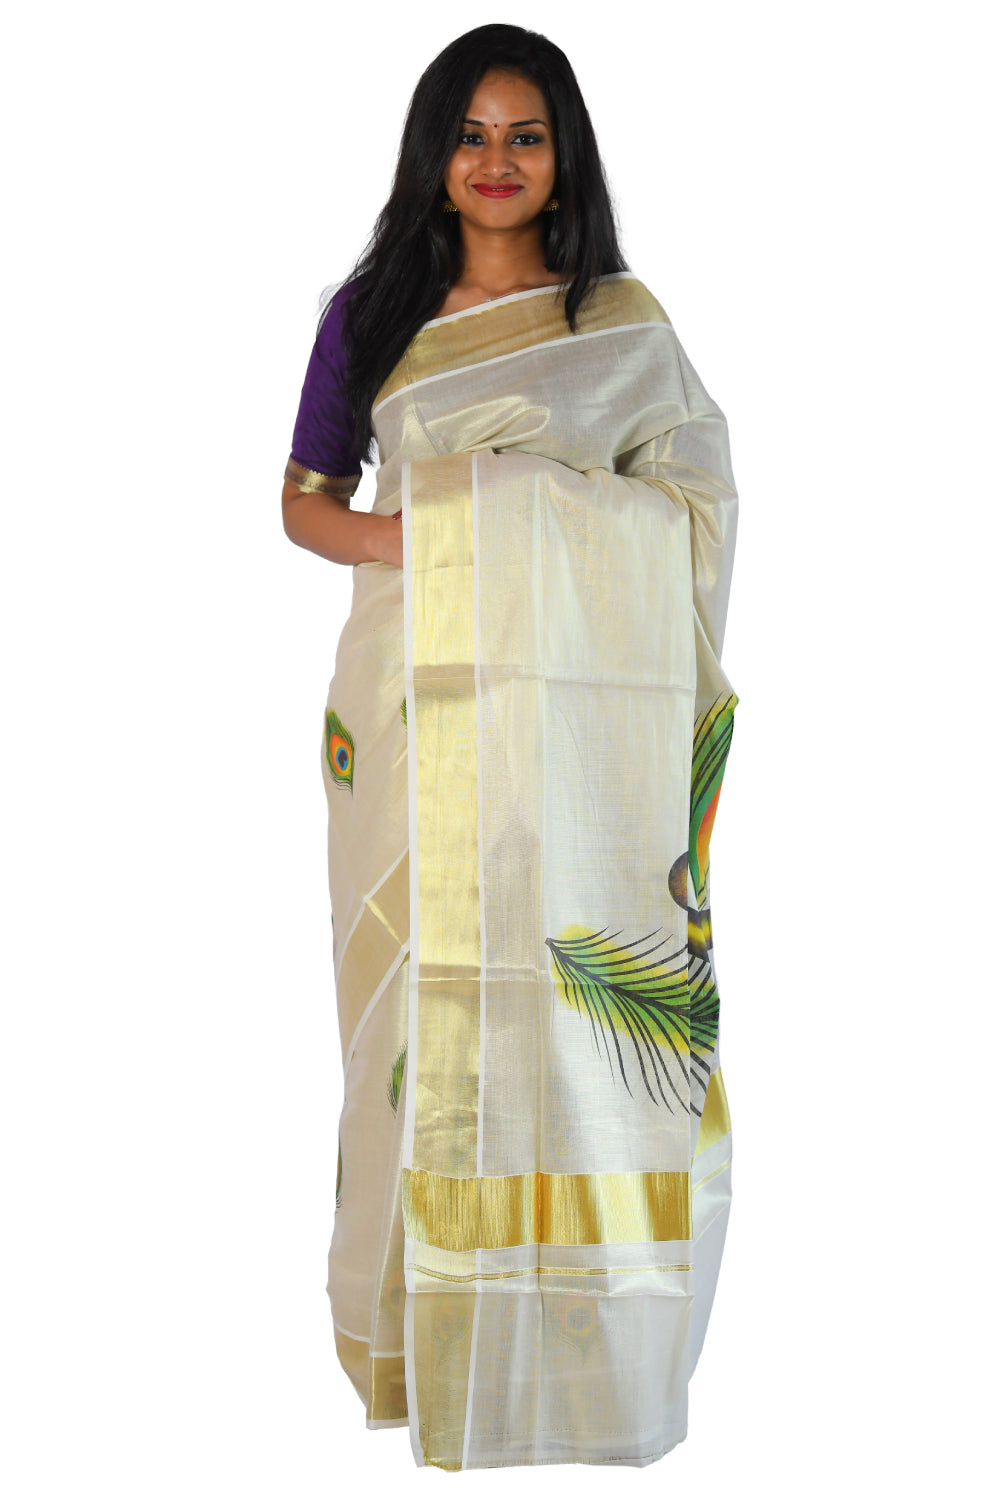 Kerala Tissue Kasavu Saree With Peacock Feather and Flute Design